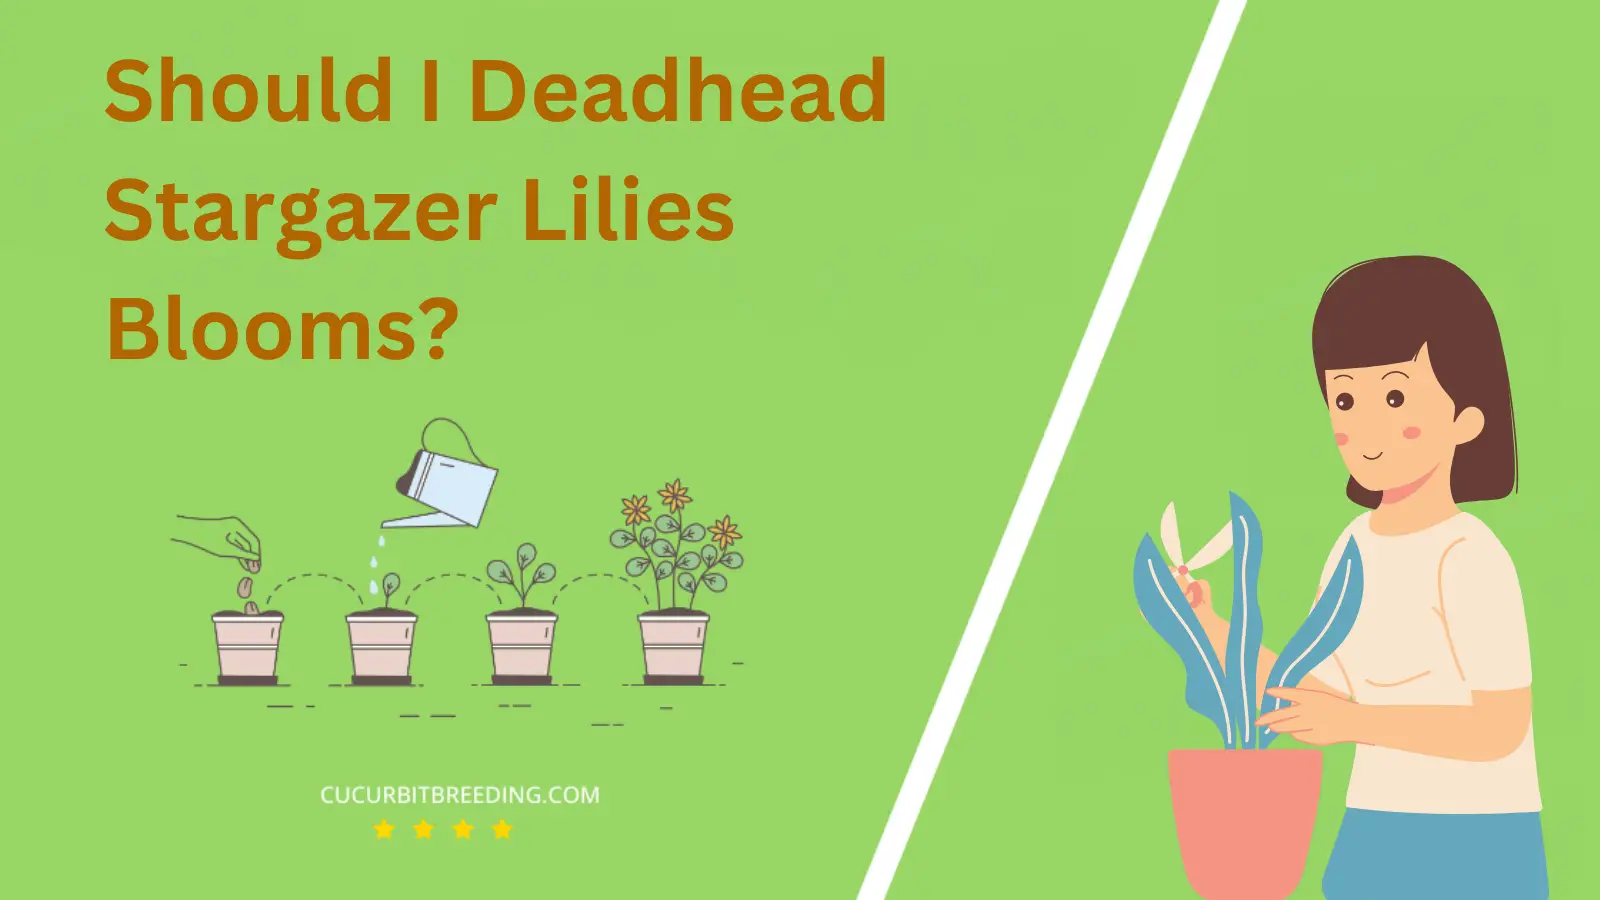 Should I Deadhead Stargazer Lilies Blooms?